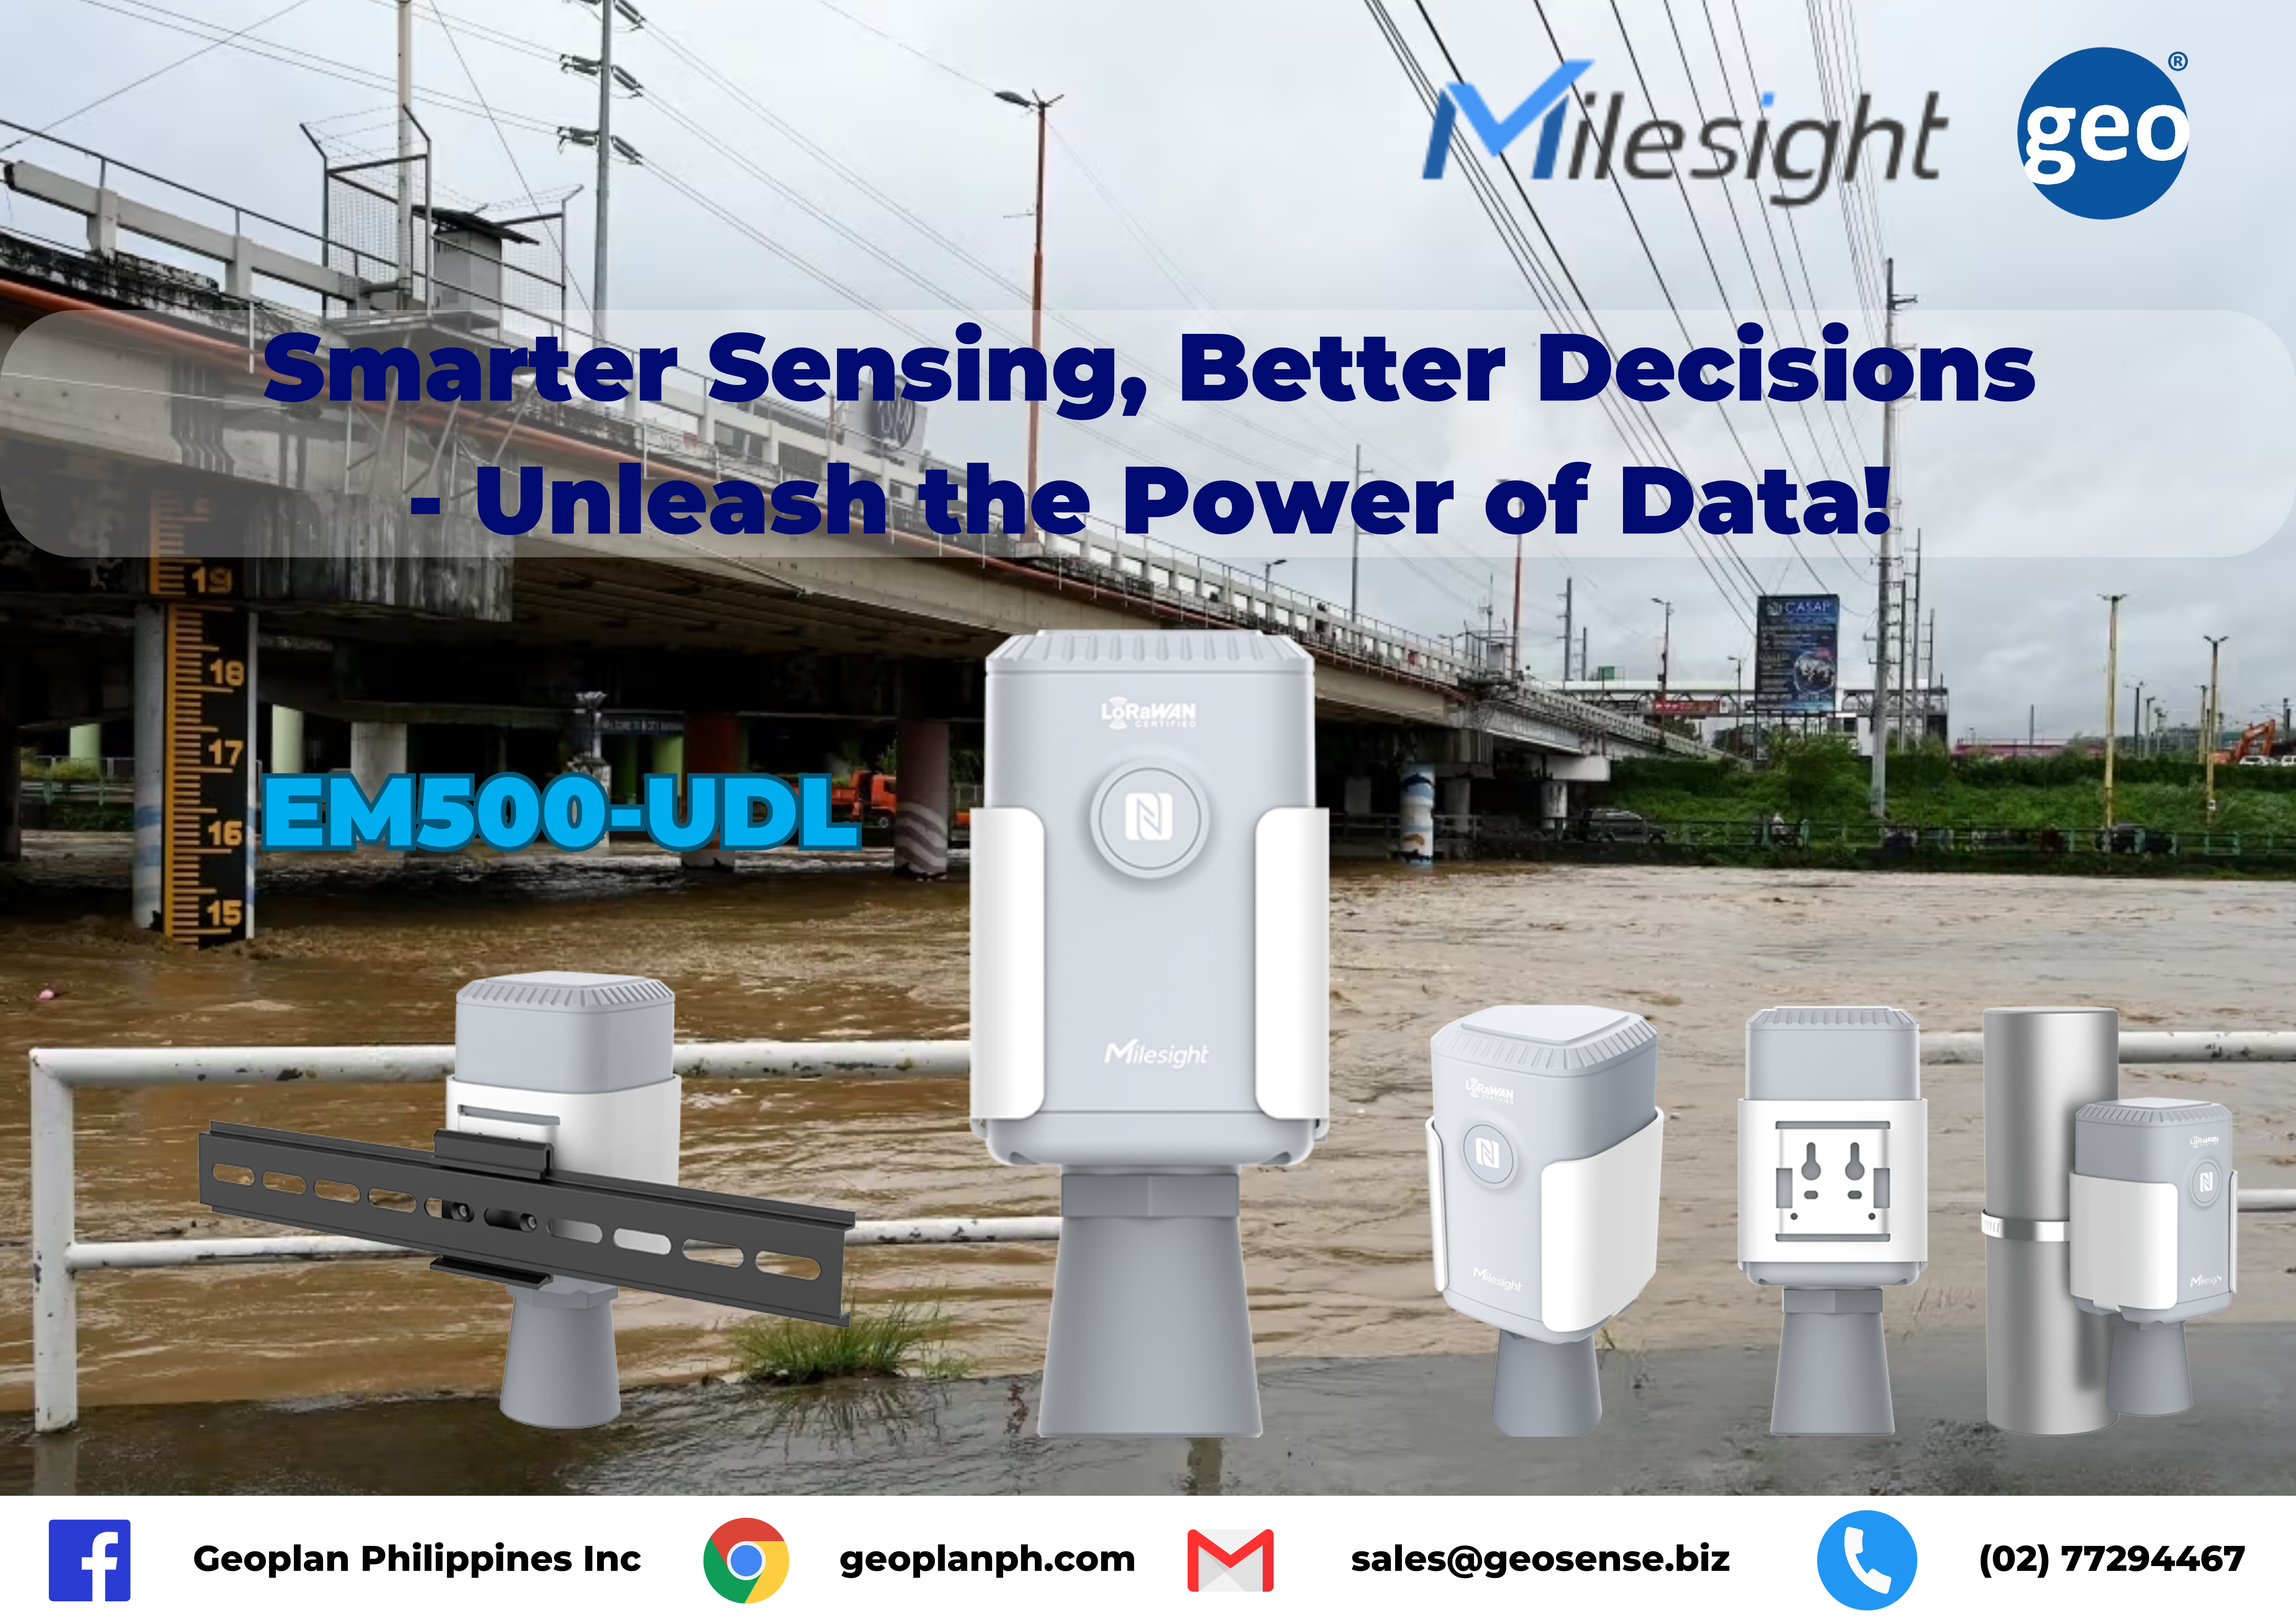 Milesight: EM500-UDL Smarter Sensing, Better Decisions. Unleash the Power of Data!